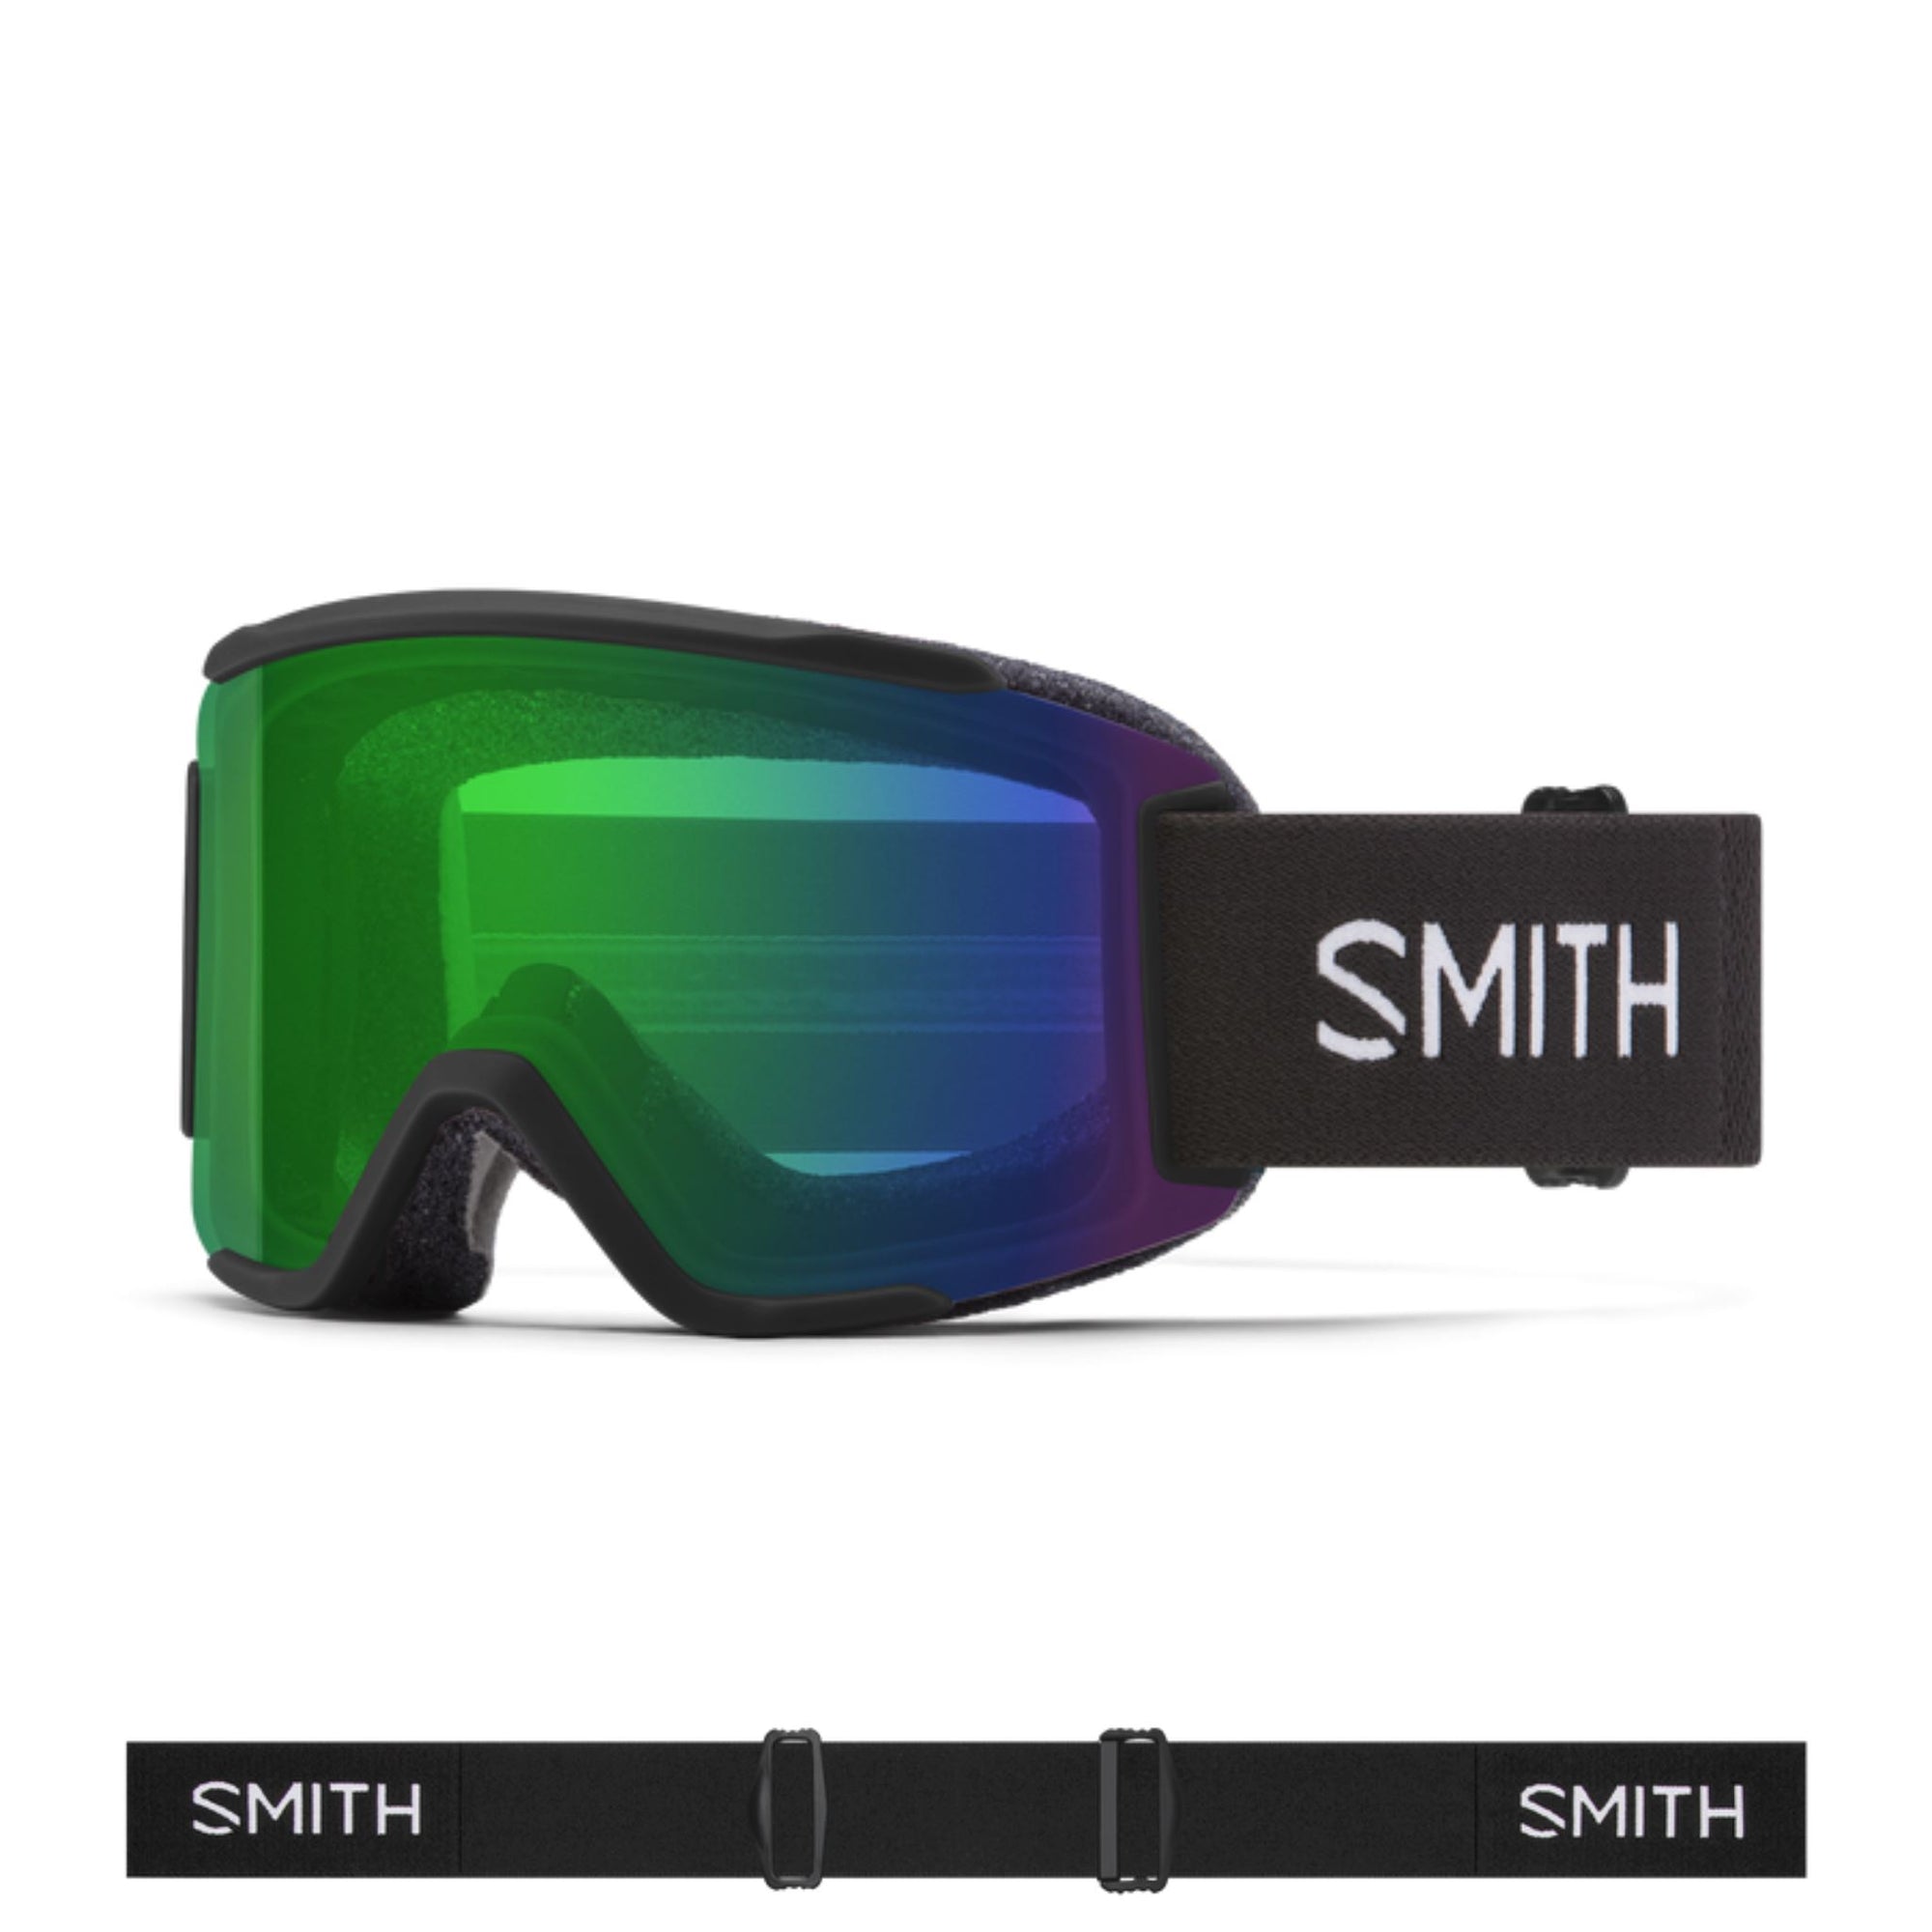 Smith Squad S Goggles (Small Fit) - Black ChromaPop Everyday Green Mirror Goggles Smith 